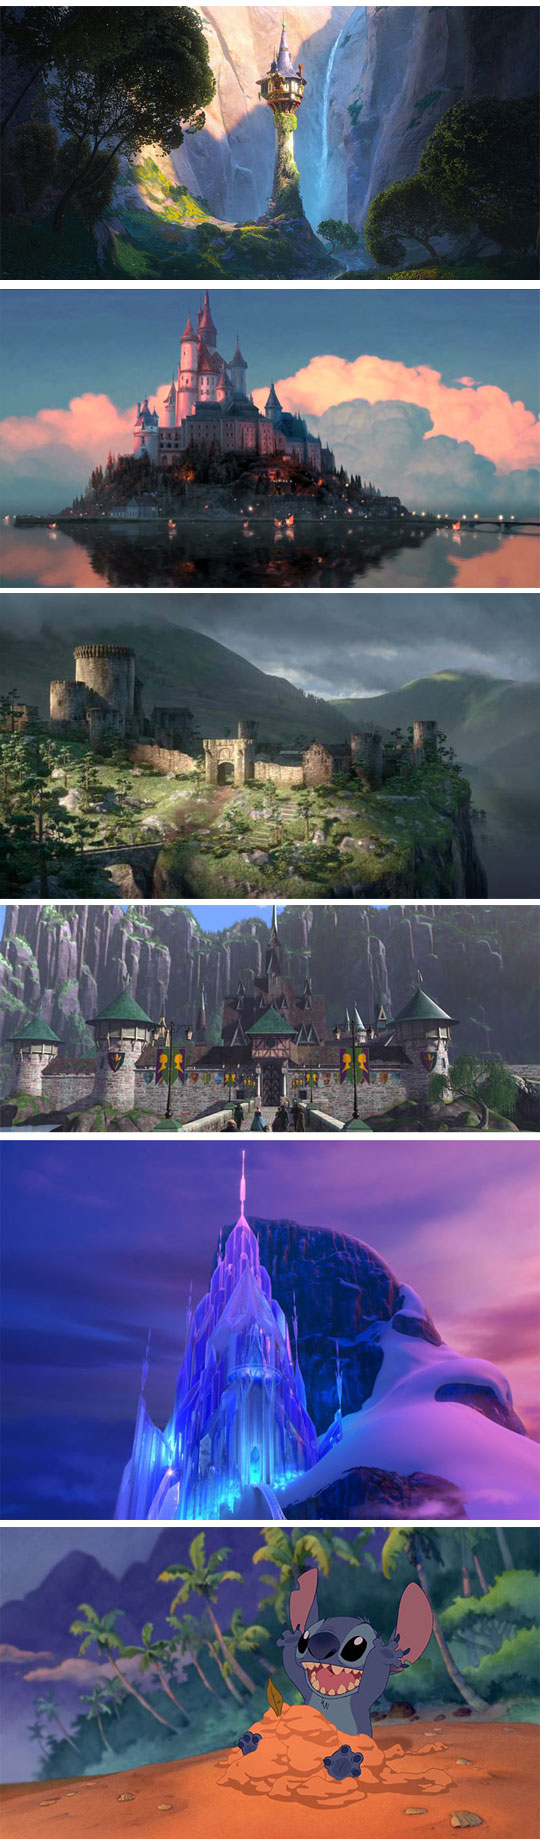 cool-Disney-castles-movies-animated-Princess